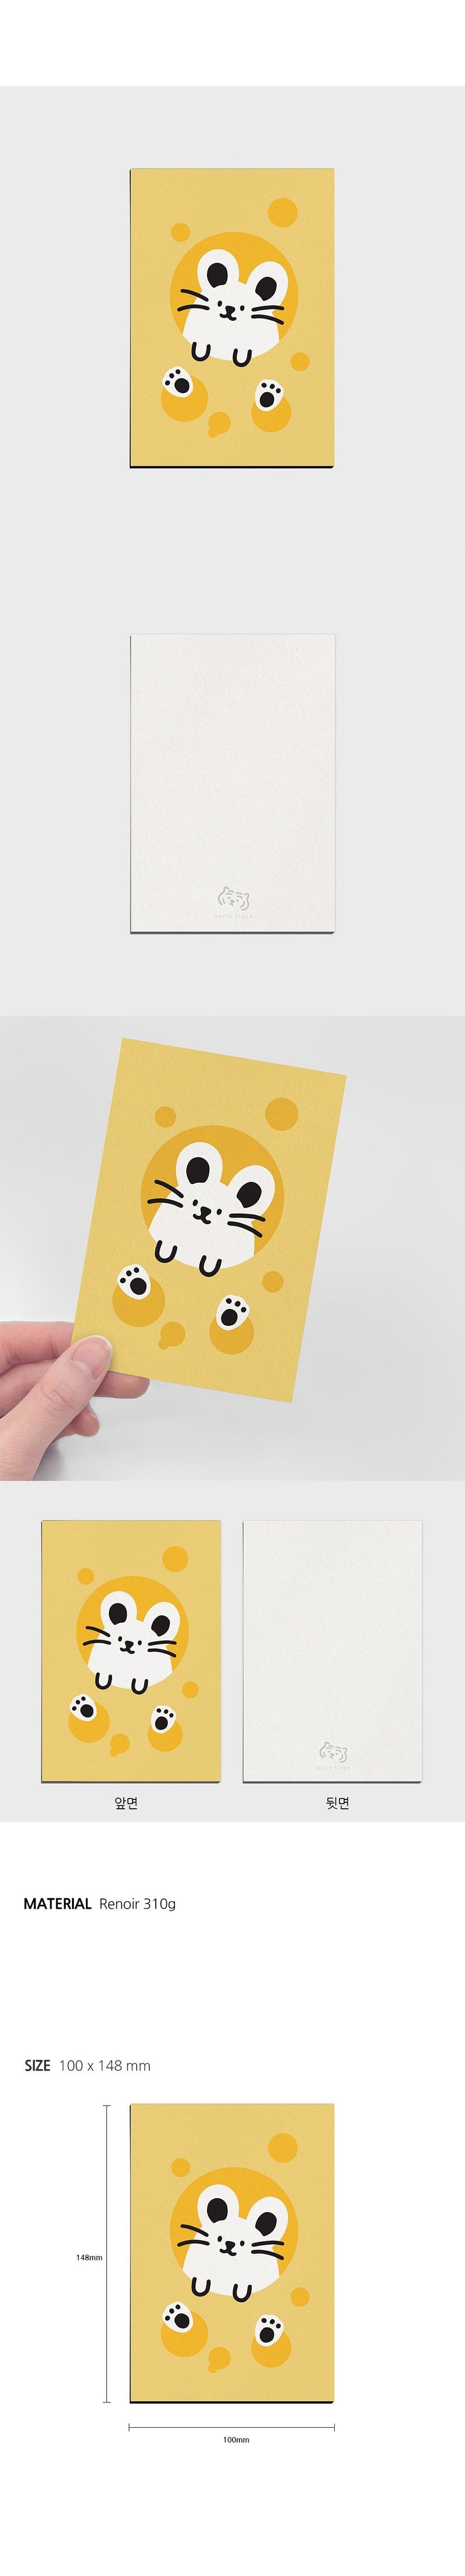 cheese mouse ポストカード